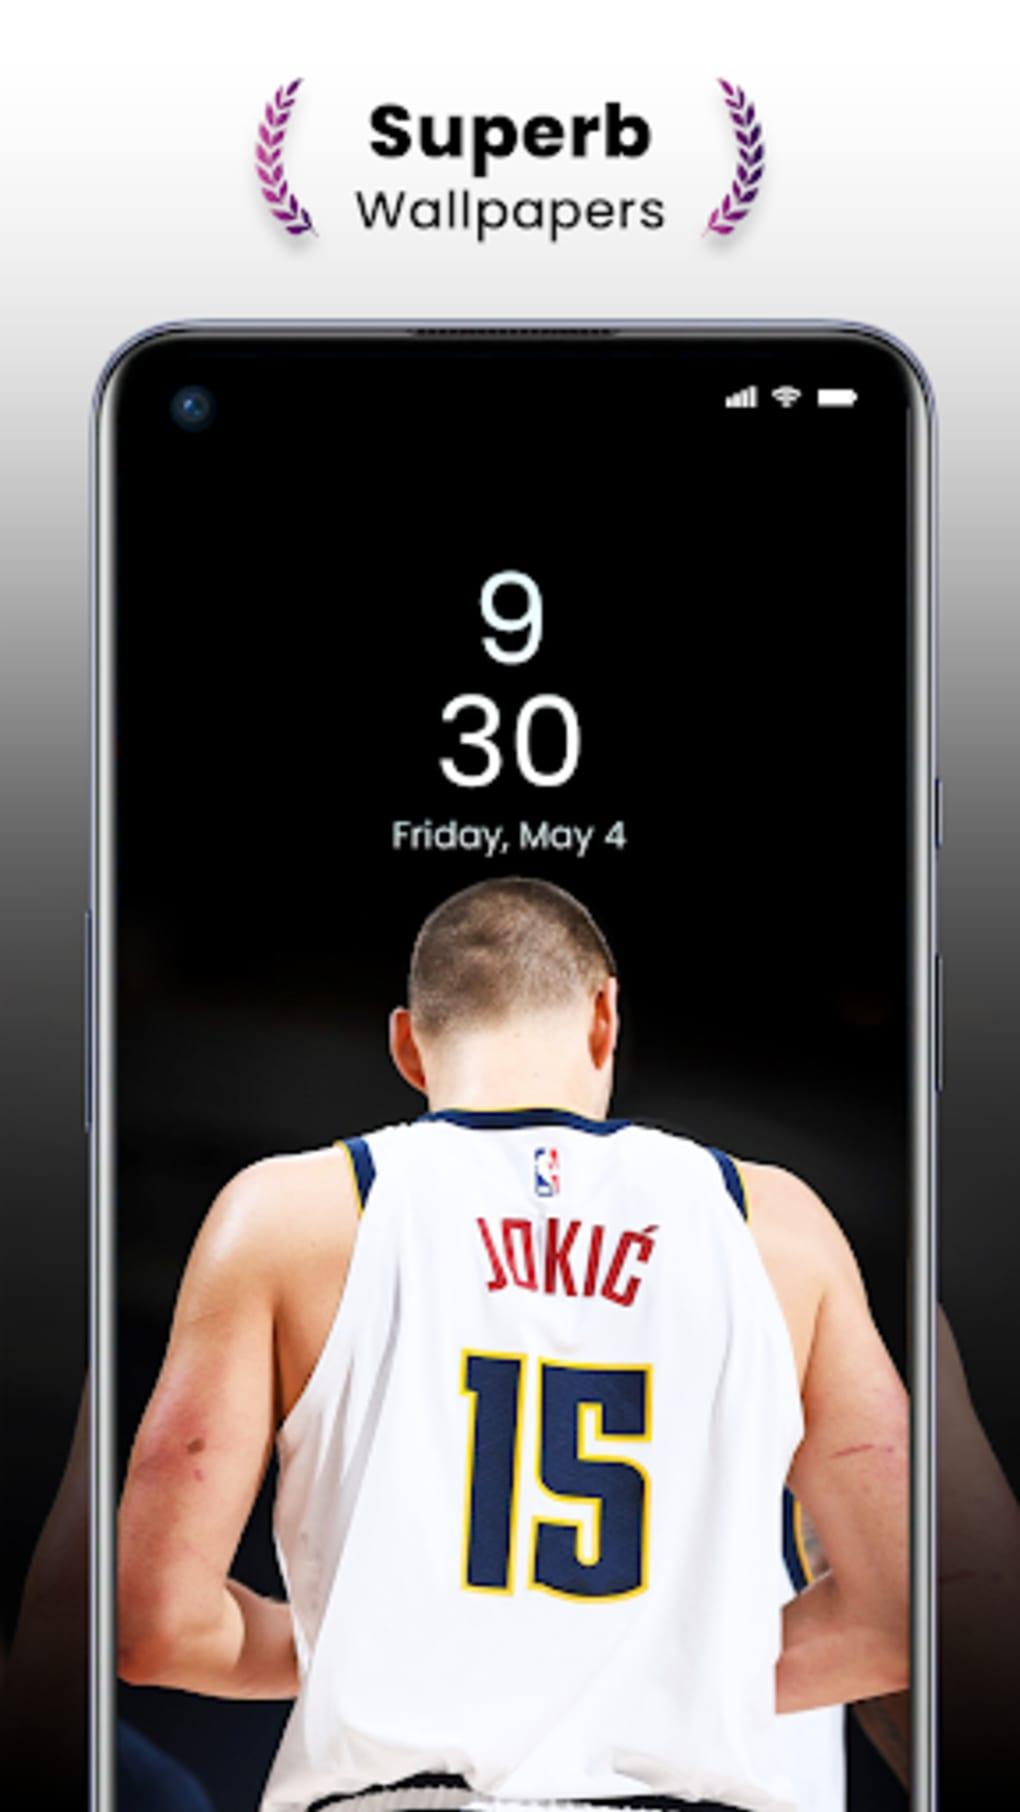 Nba Wallpaper Basketball For Android